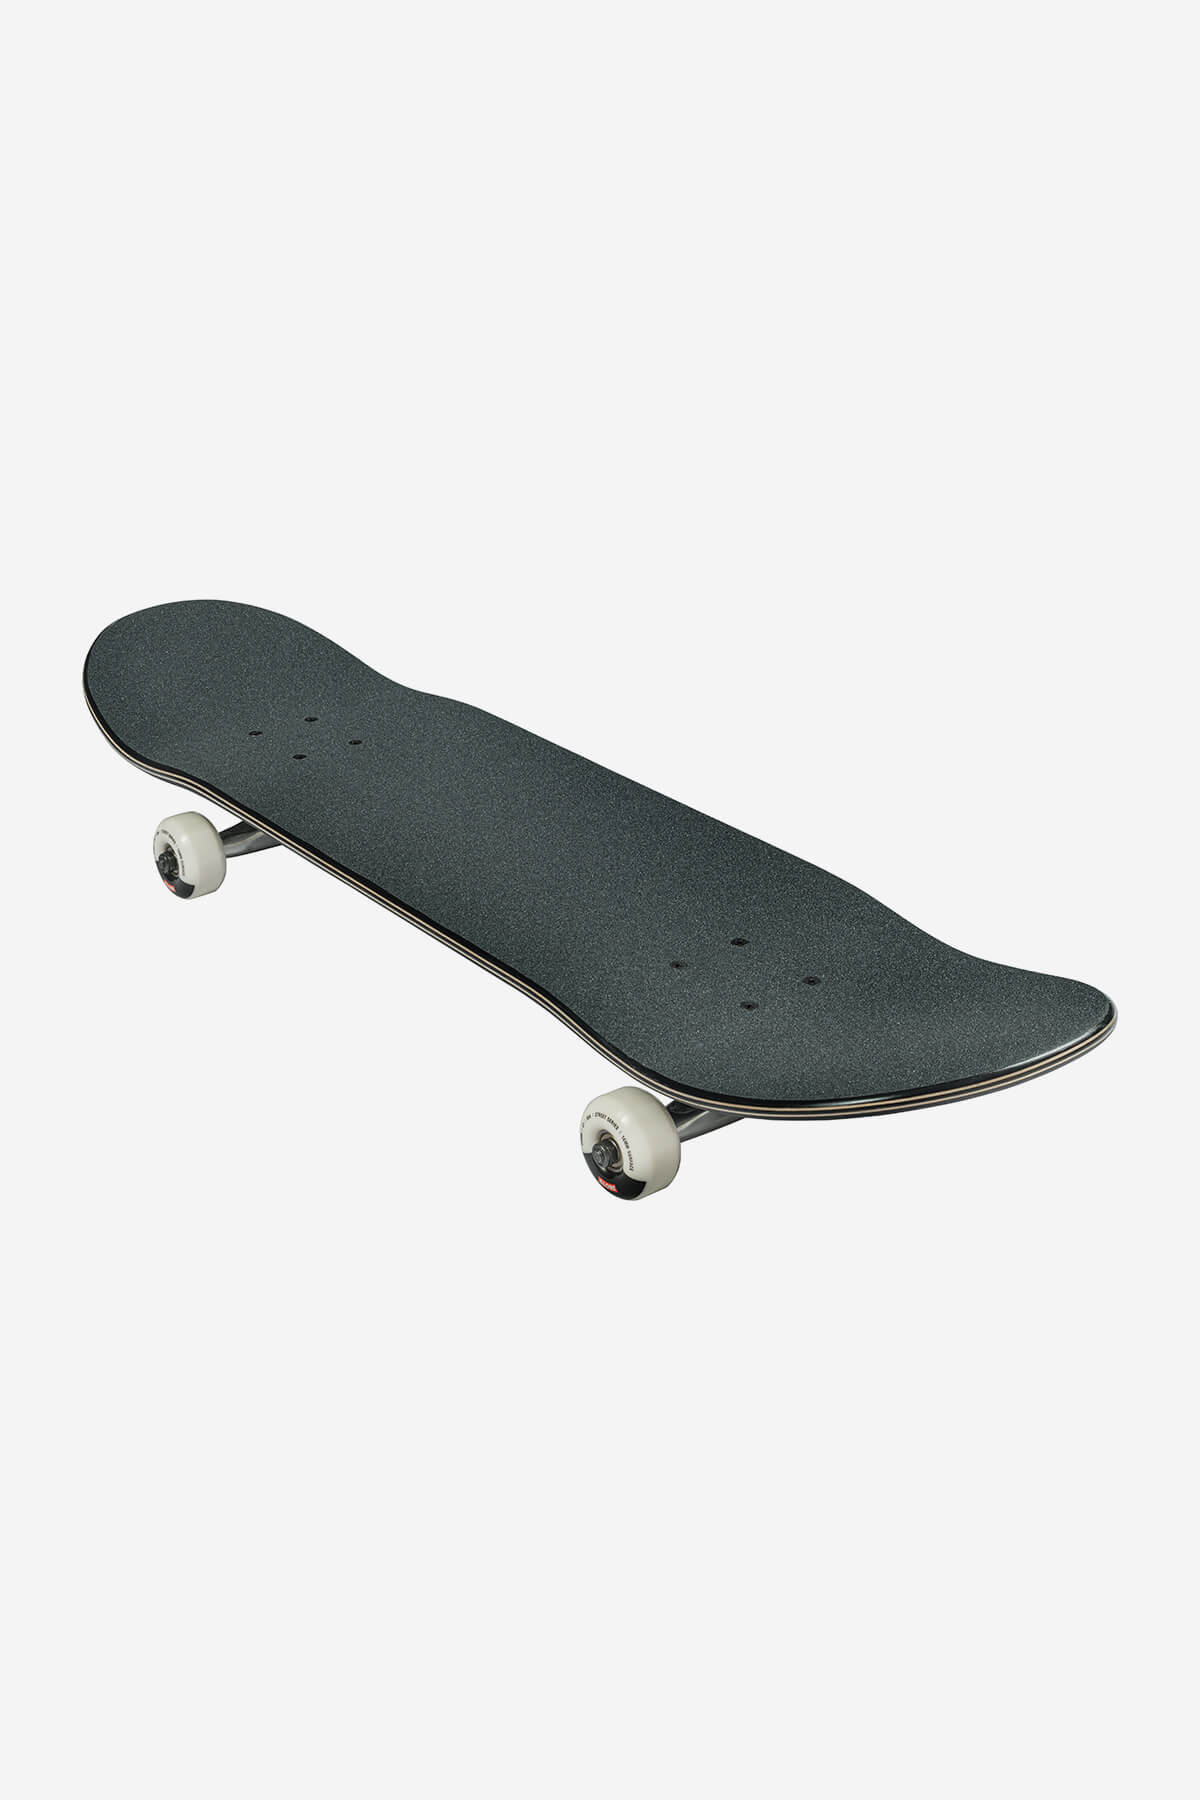 g1 argo black camo 8.125" complete skateboard